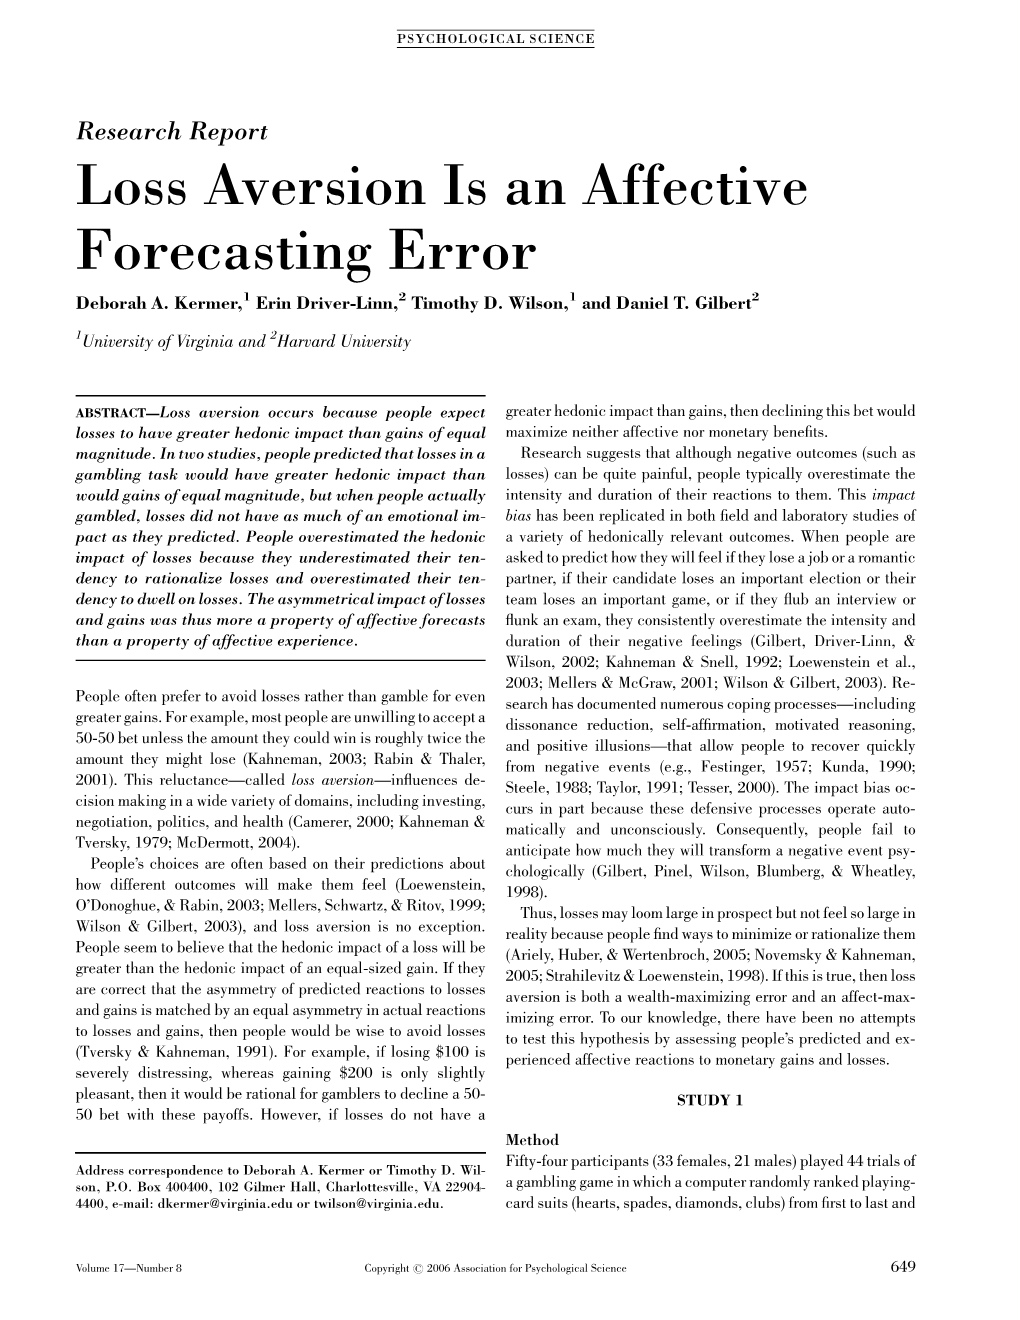 Loss Aversion Is an Affective Forecasting Error Deborah A